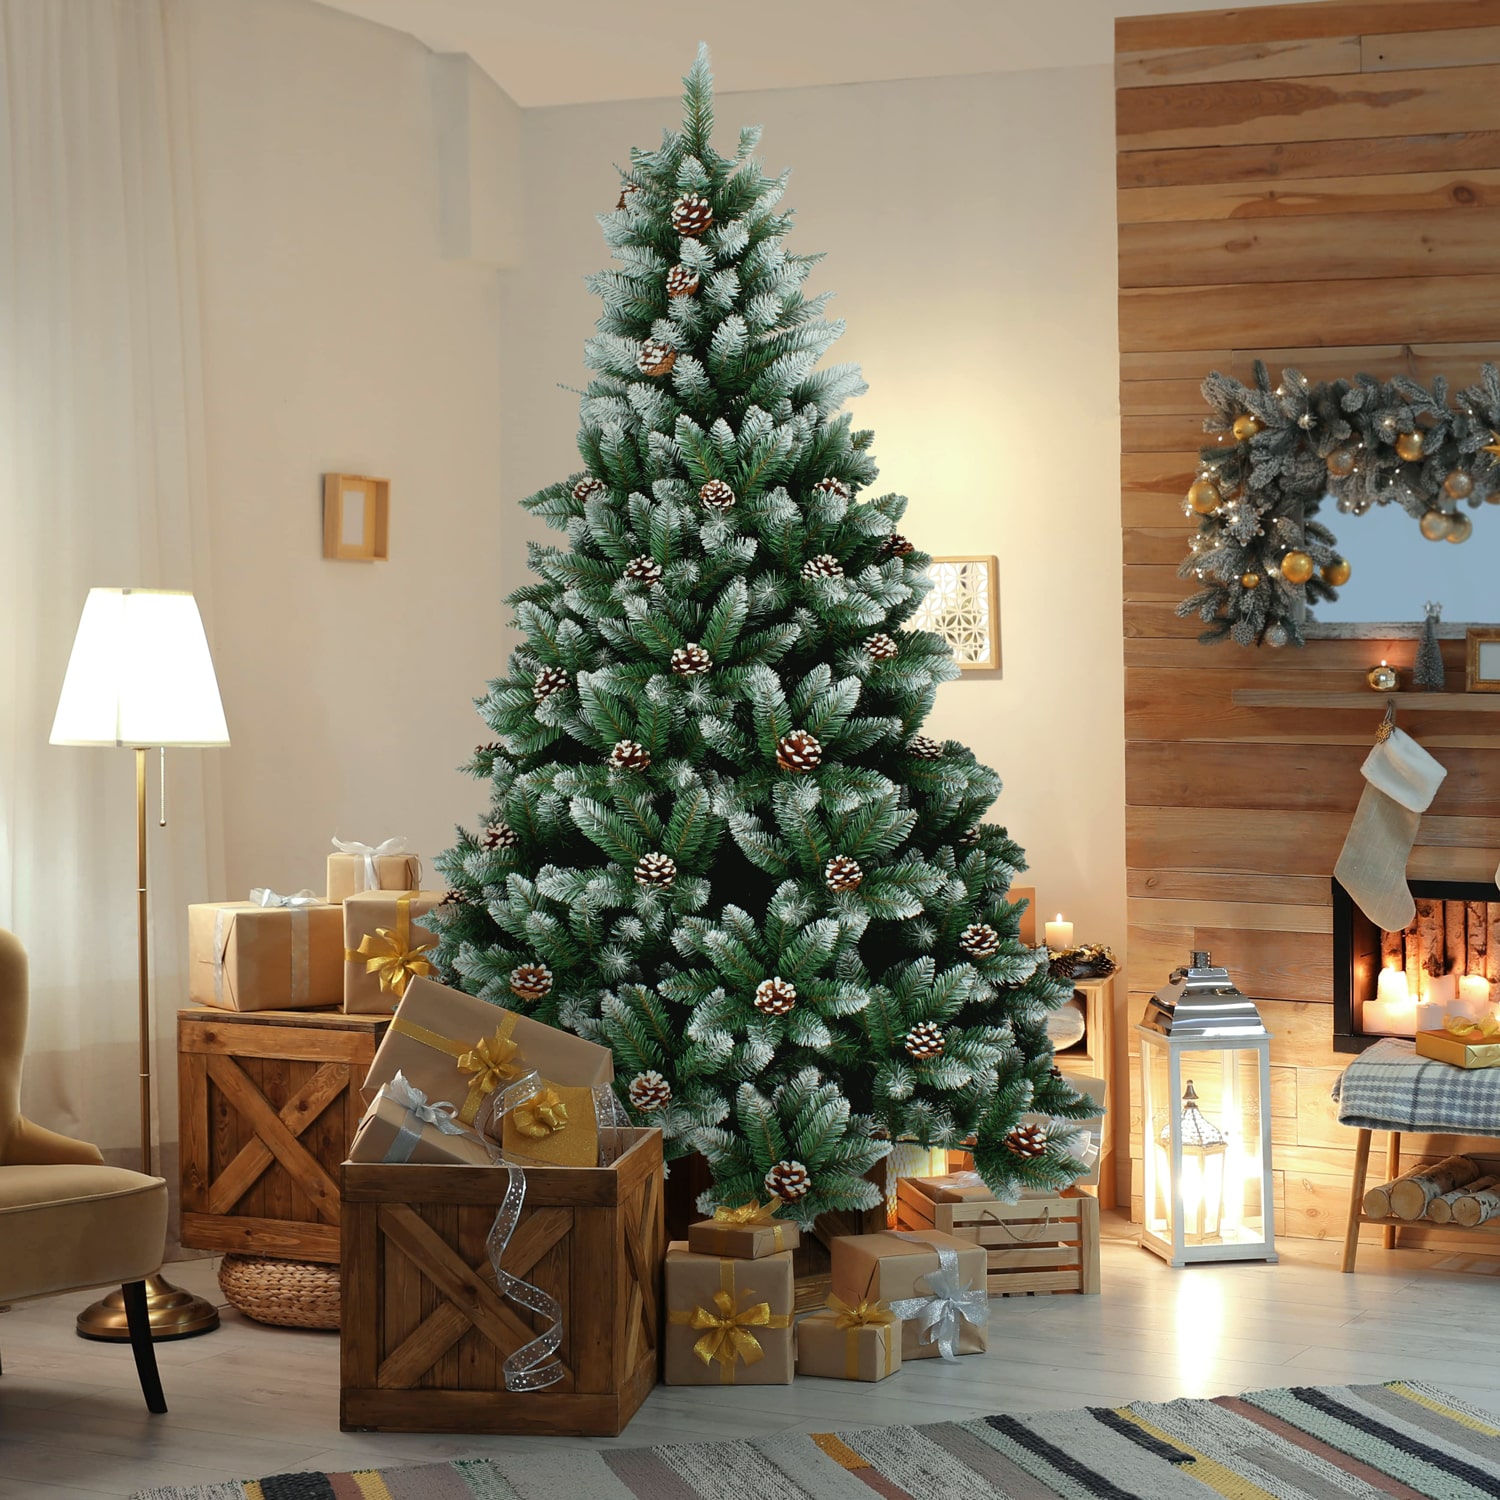 EcoXmas - High quality Christmas trees and lights